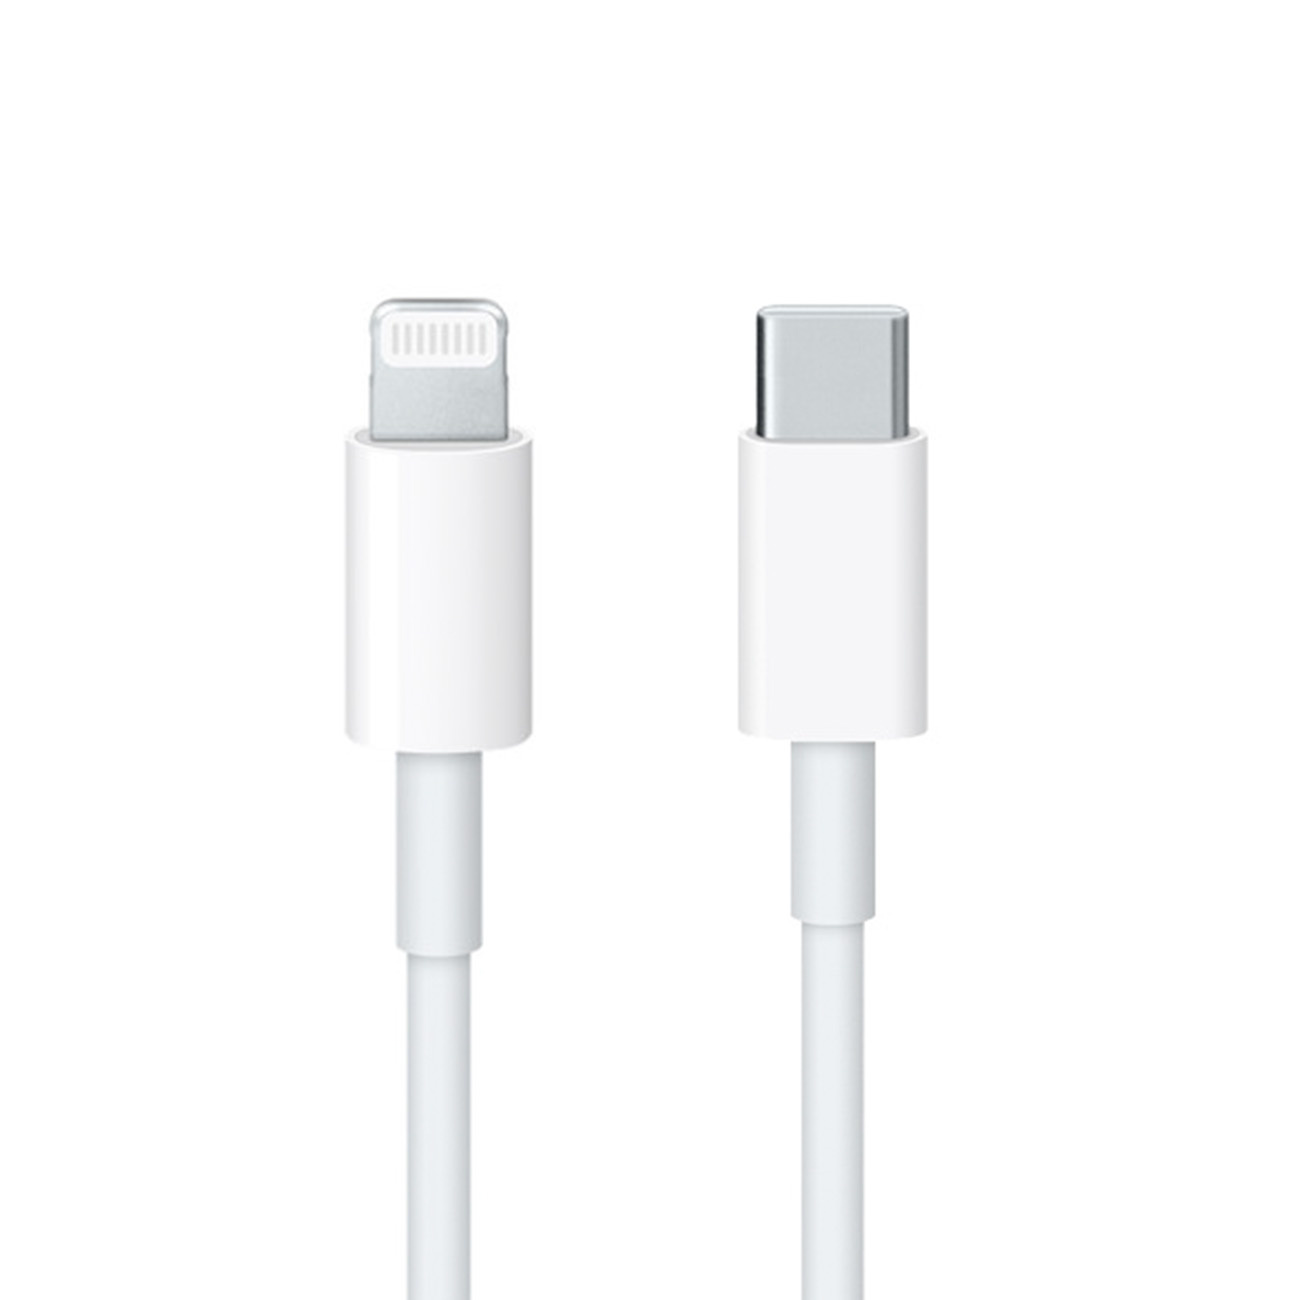 Apple cable USB C - Lightning 2m white (MKQ42ZM/A)